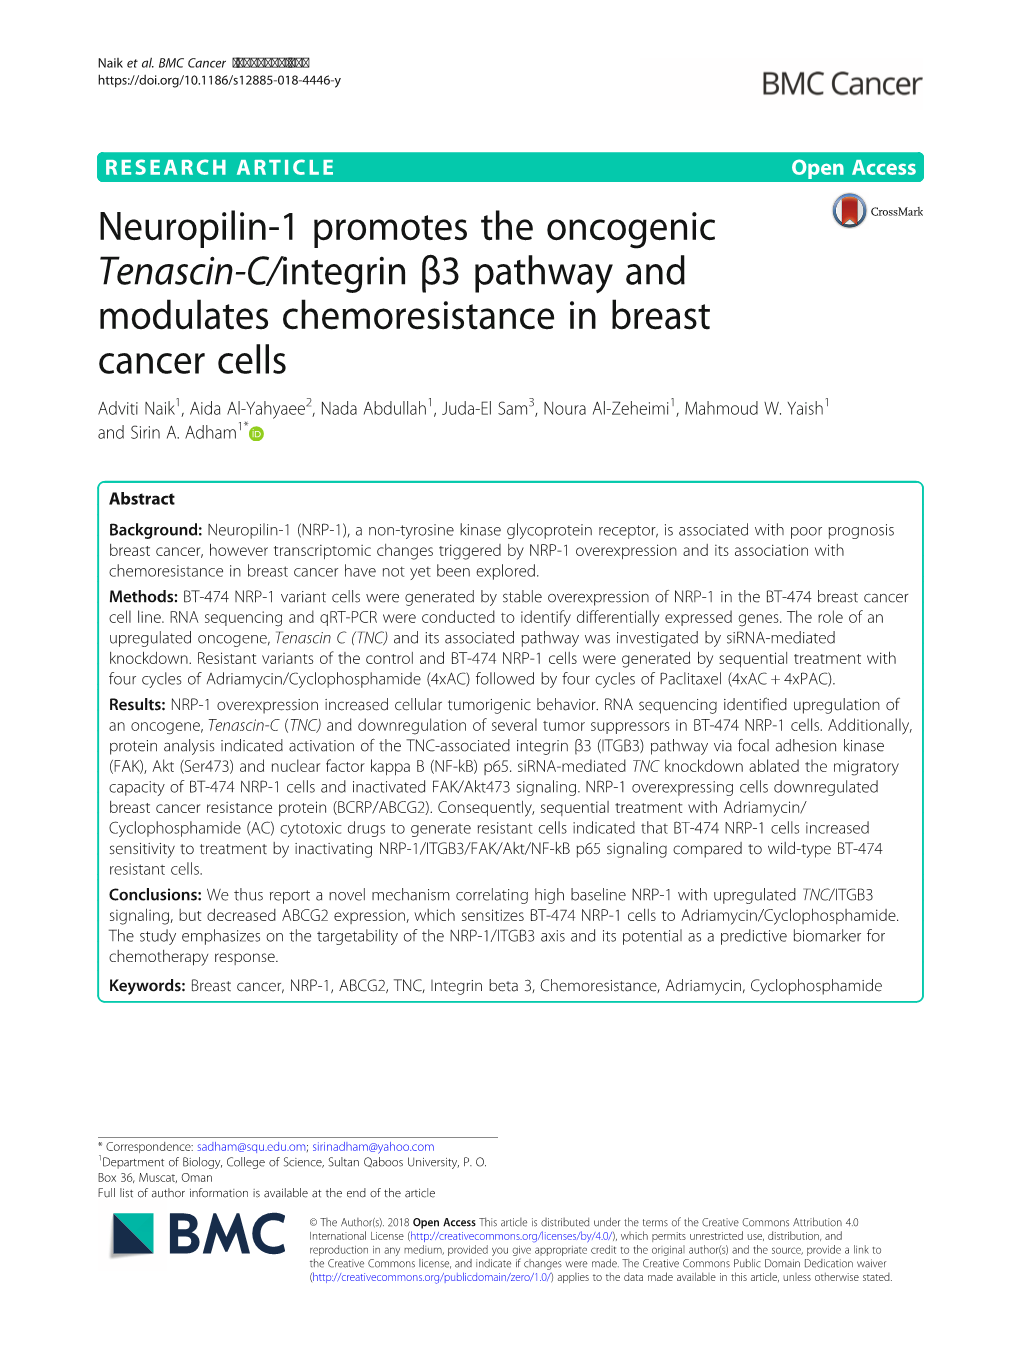 Neuropilin-1 Promotes the Oncogenic Tenascin-C/Integrin Β3 Pathway